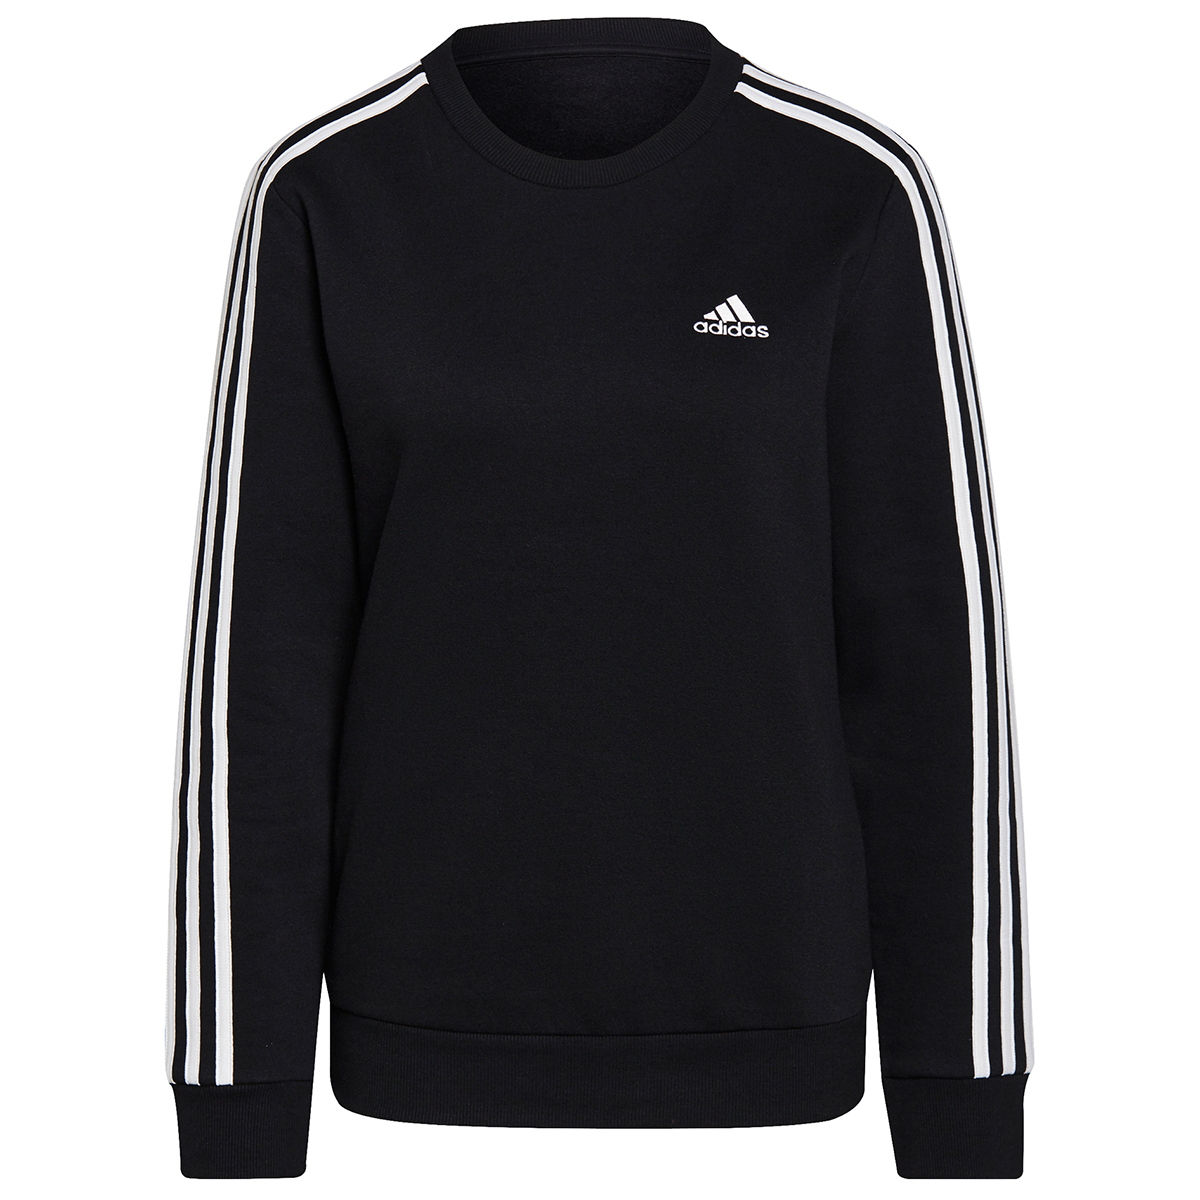 Adidas Women's Essential 3-Stripes Fleece Sweatshirt